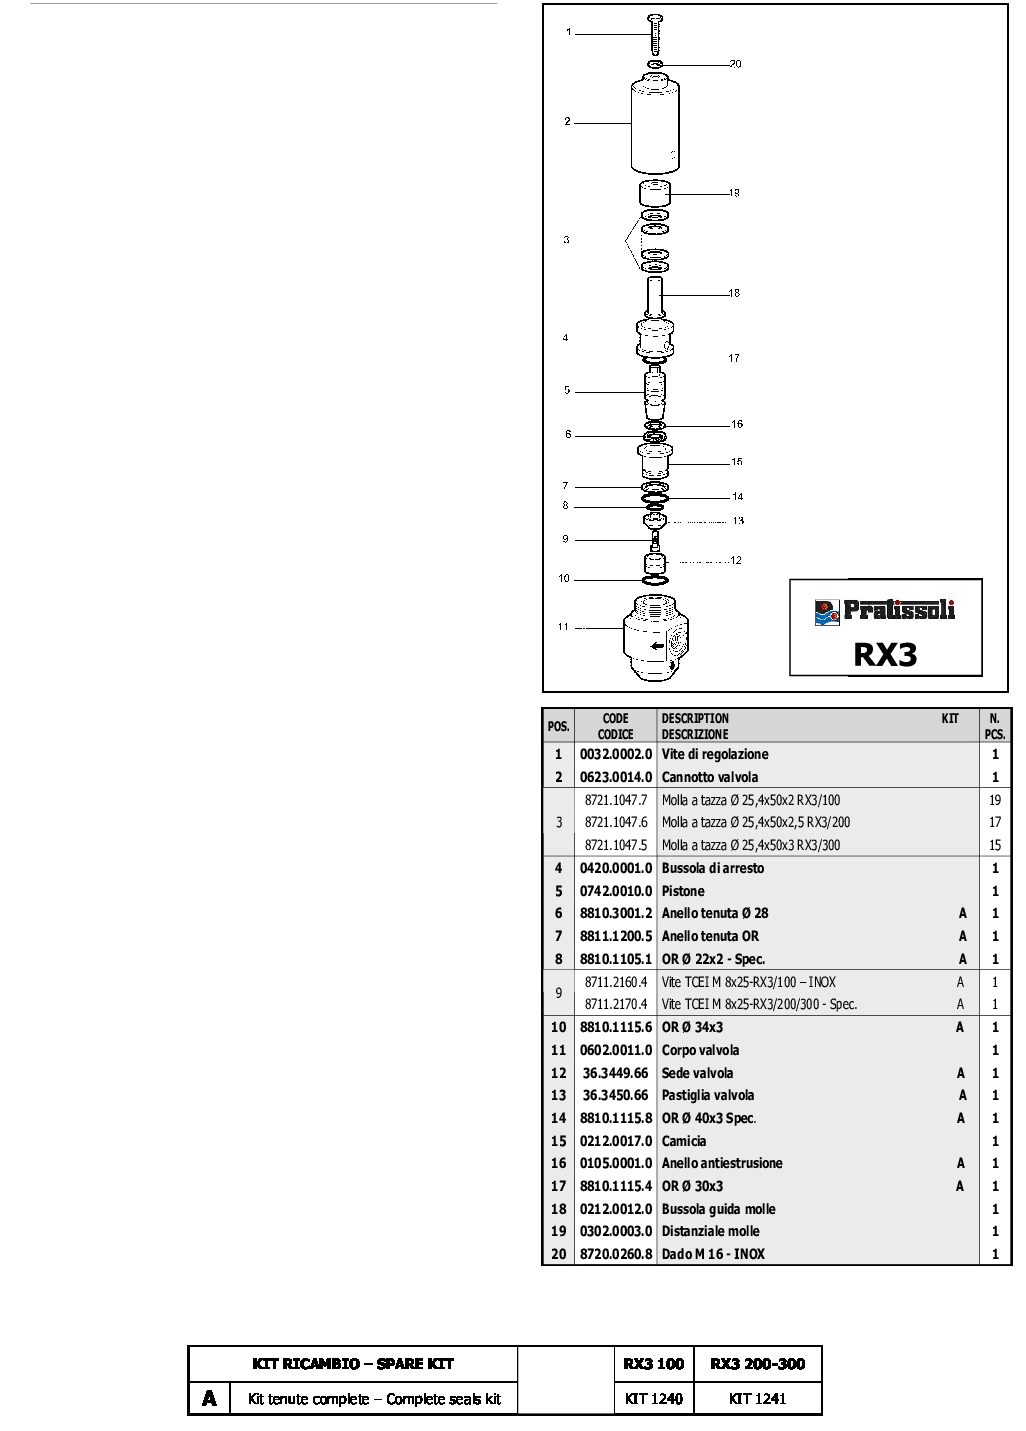 Pratissoli RX3 Regulating valve parts breakdown